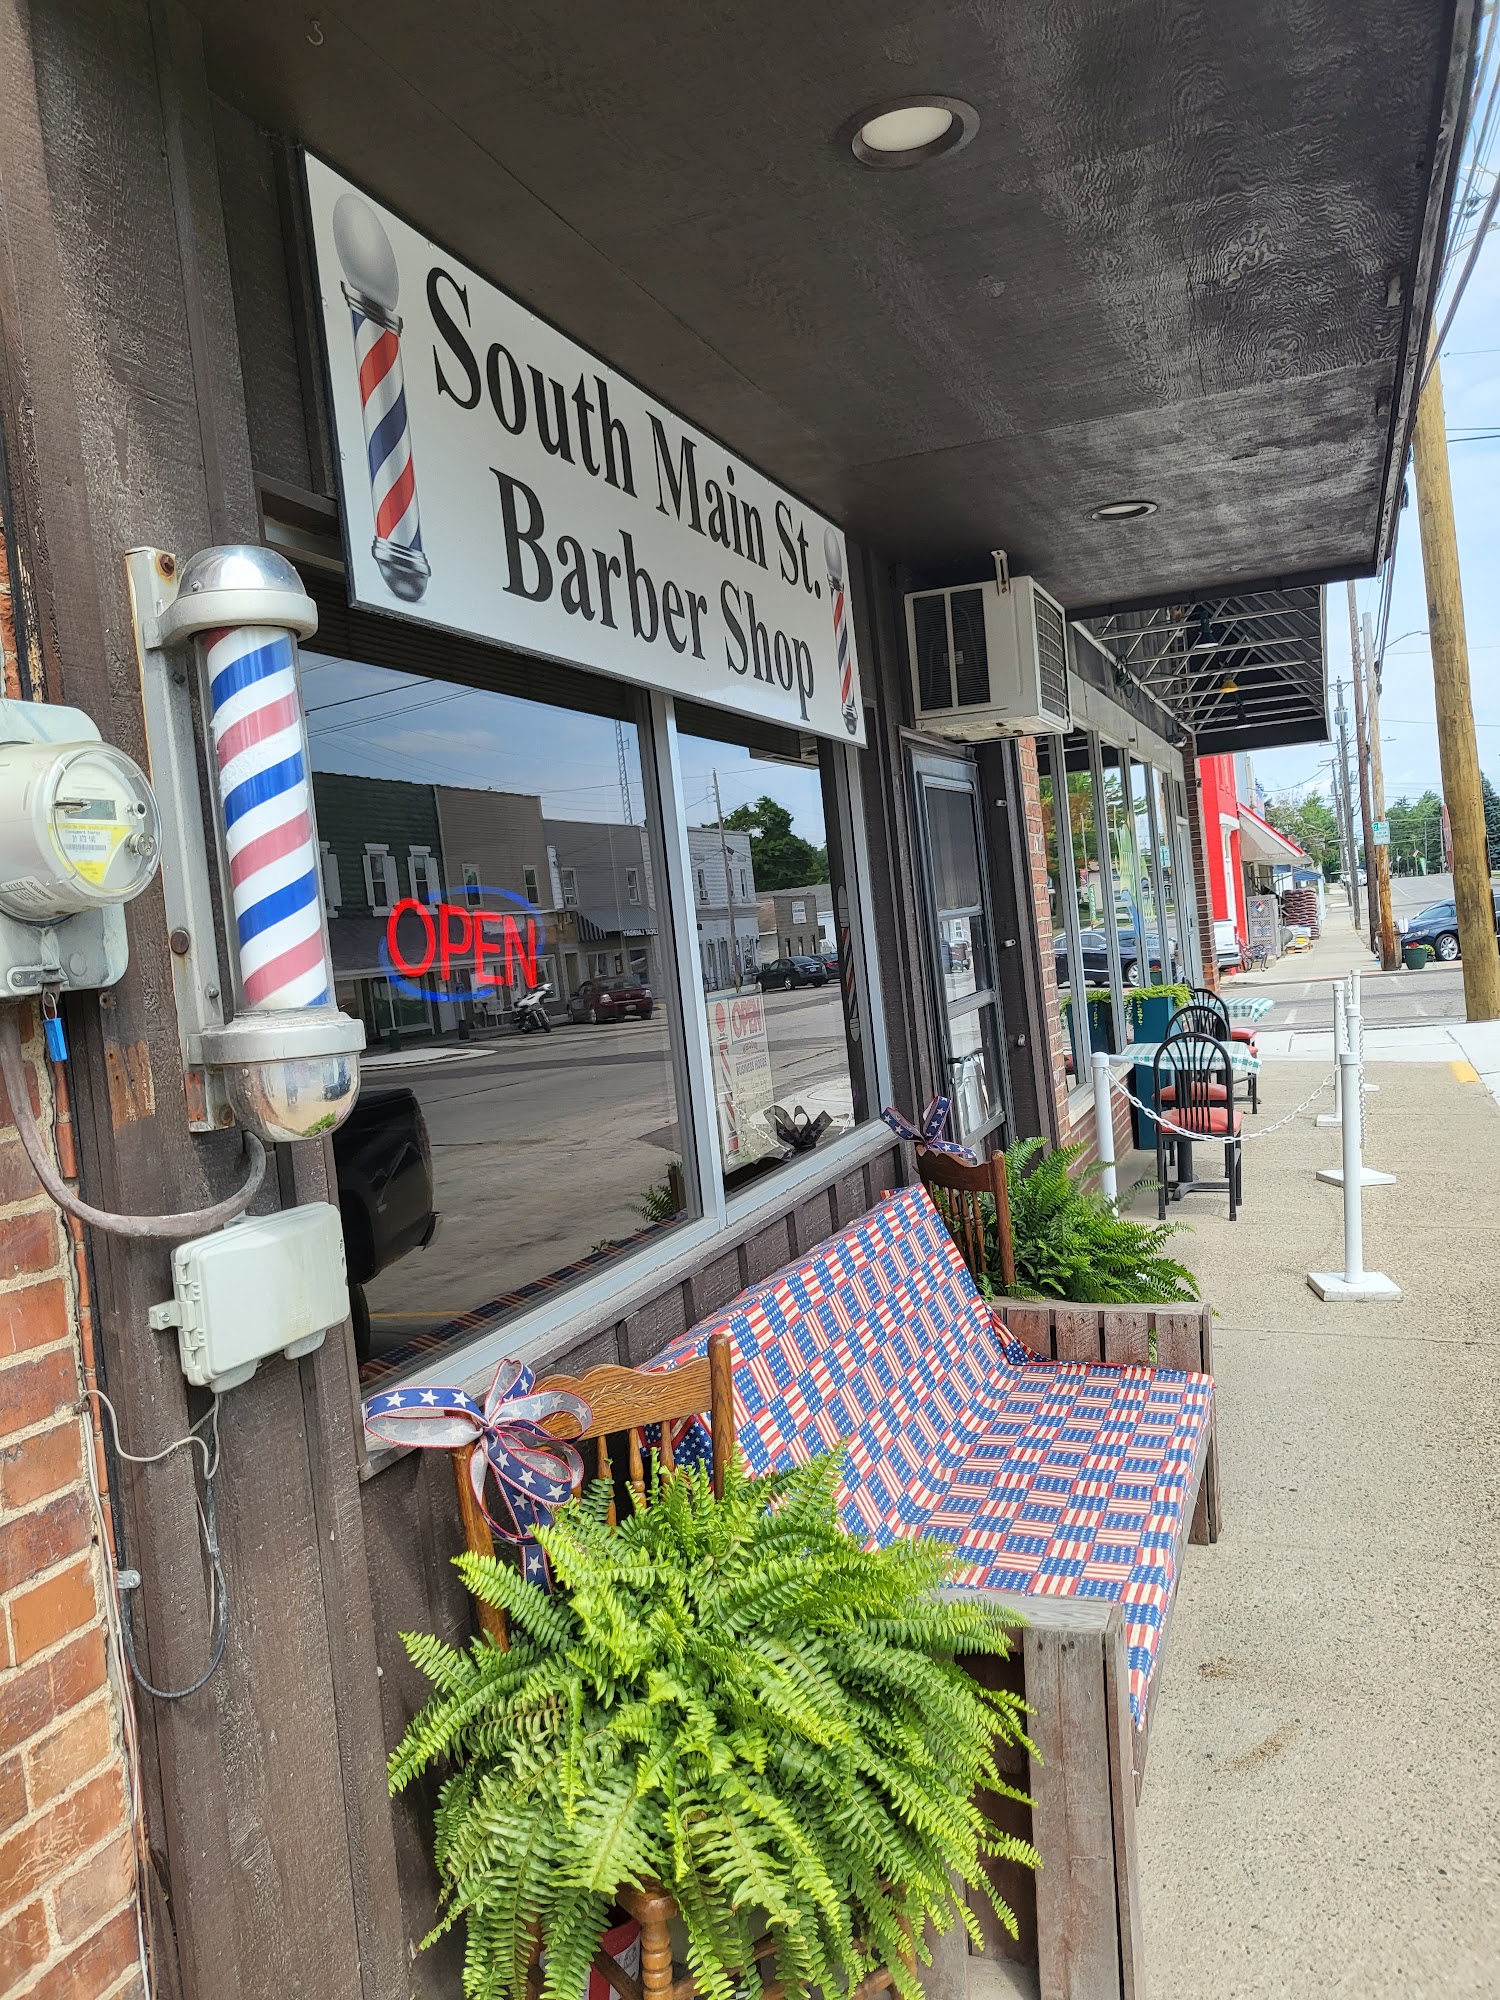 The Bush Wacker Barber Shop 106 S Main St, Onsted Michigan 49265